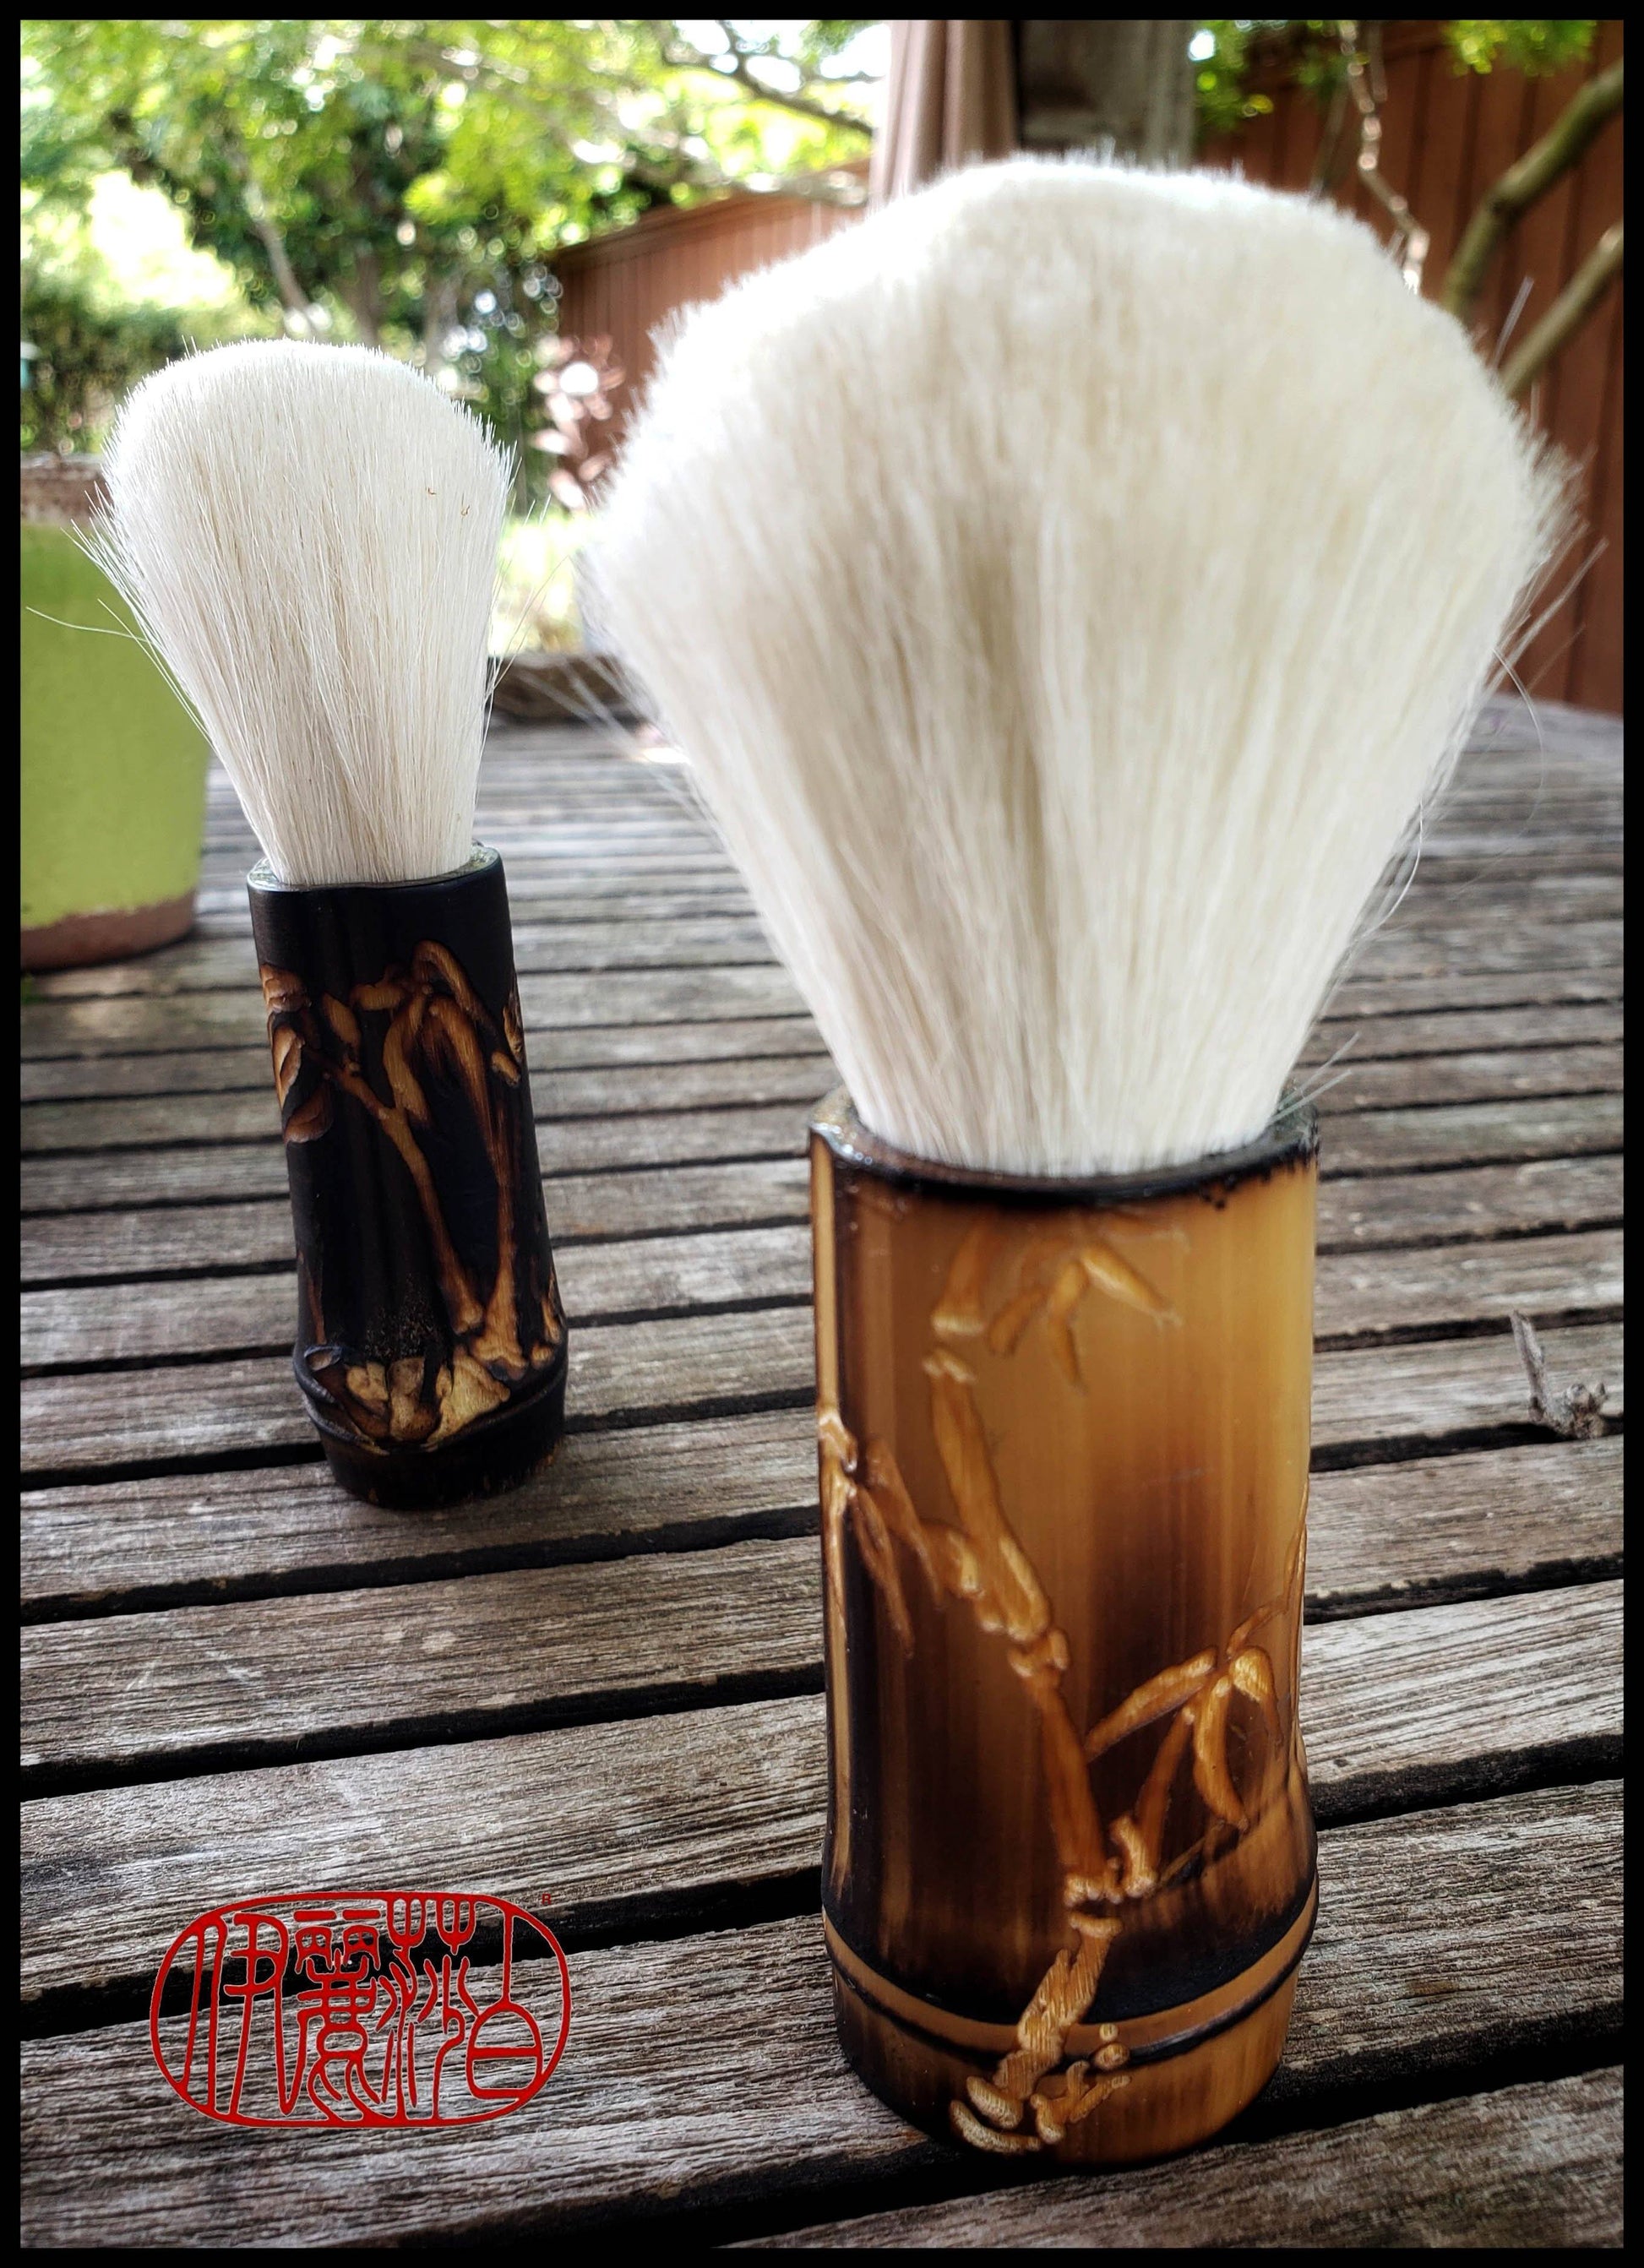 Handmade Chunky Blunt Goat Hair Sumi-e Brushes with Bamboo Handles - Elizabeth Schowachert Art